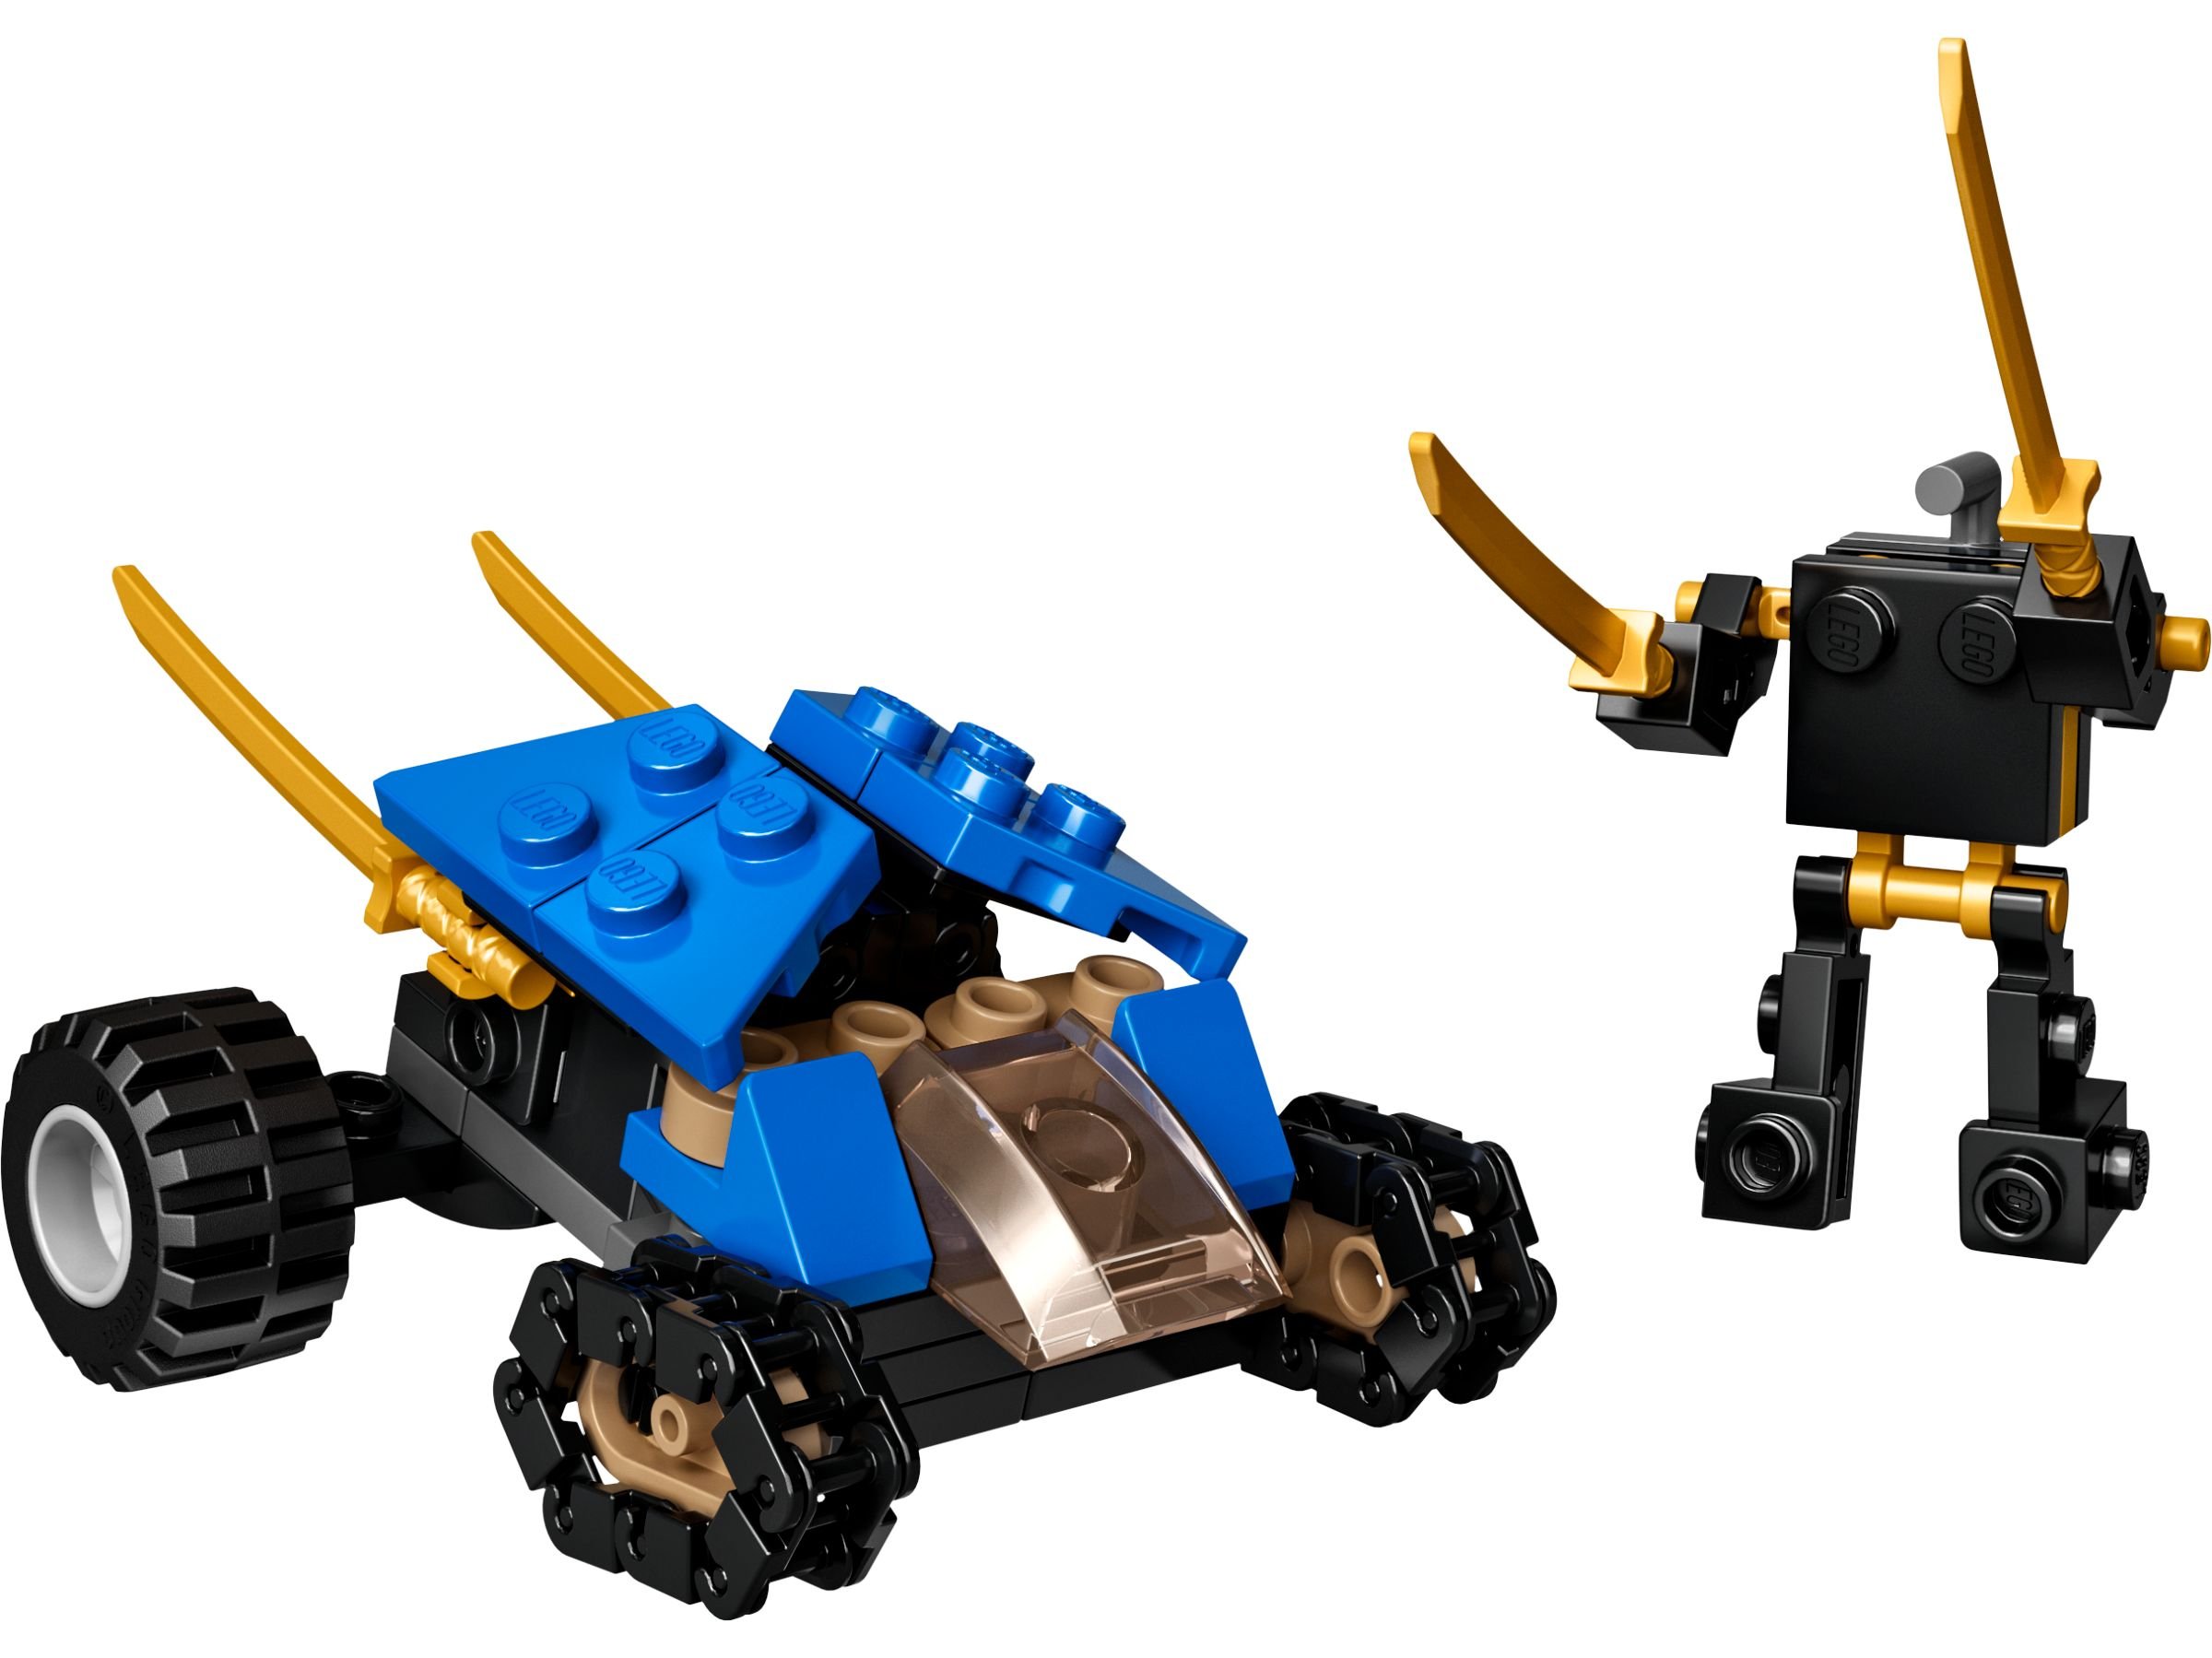 LEGO Ninjago 30592 Mini-Donnerjäger